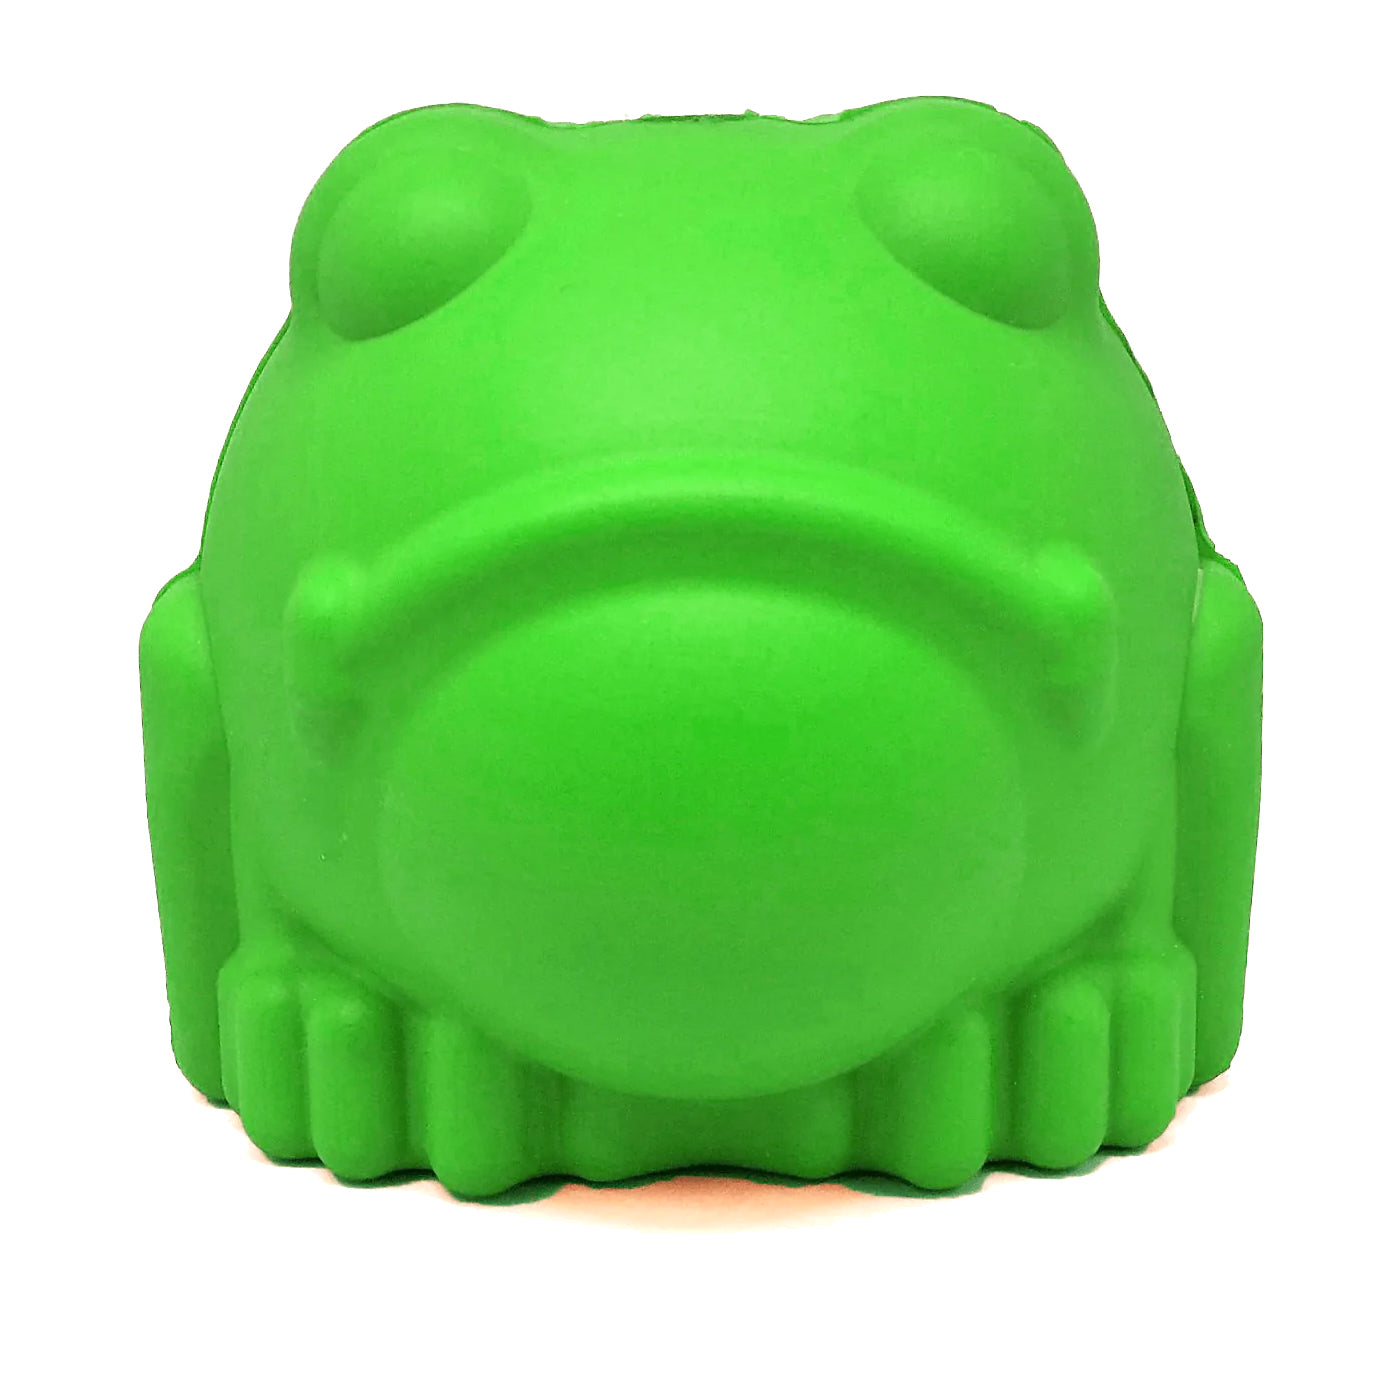 MKB Bull Frog Durable Rubber Chew Toy &amp; Treat Dispenser